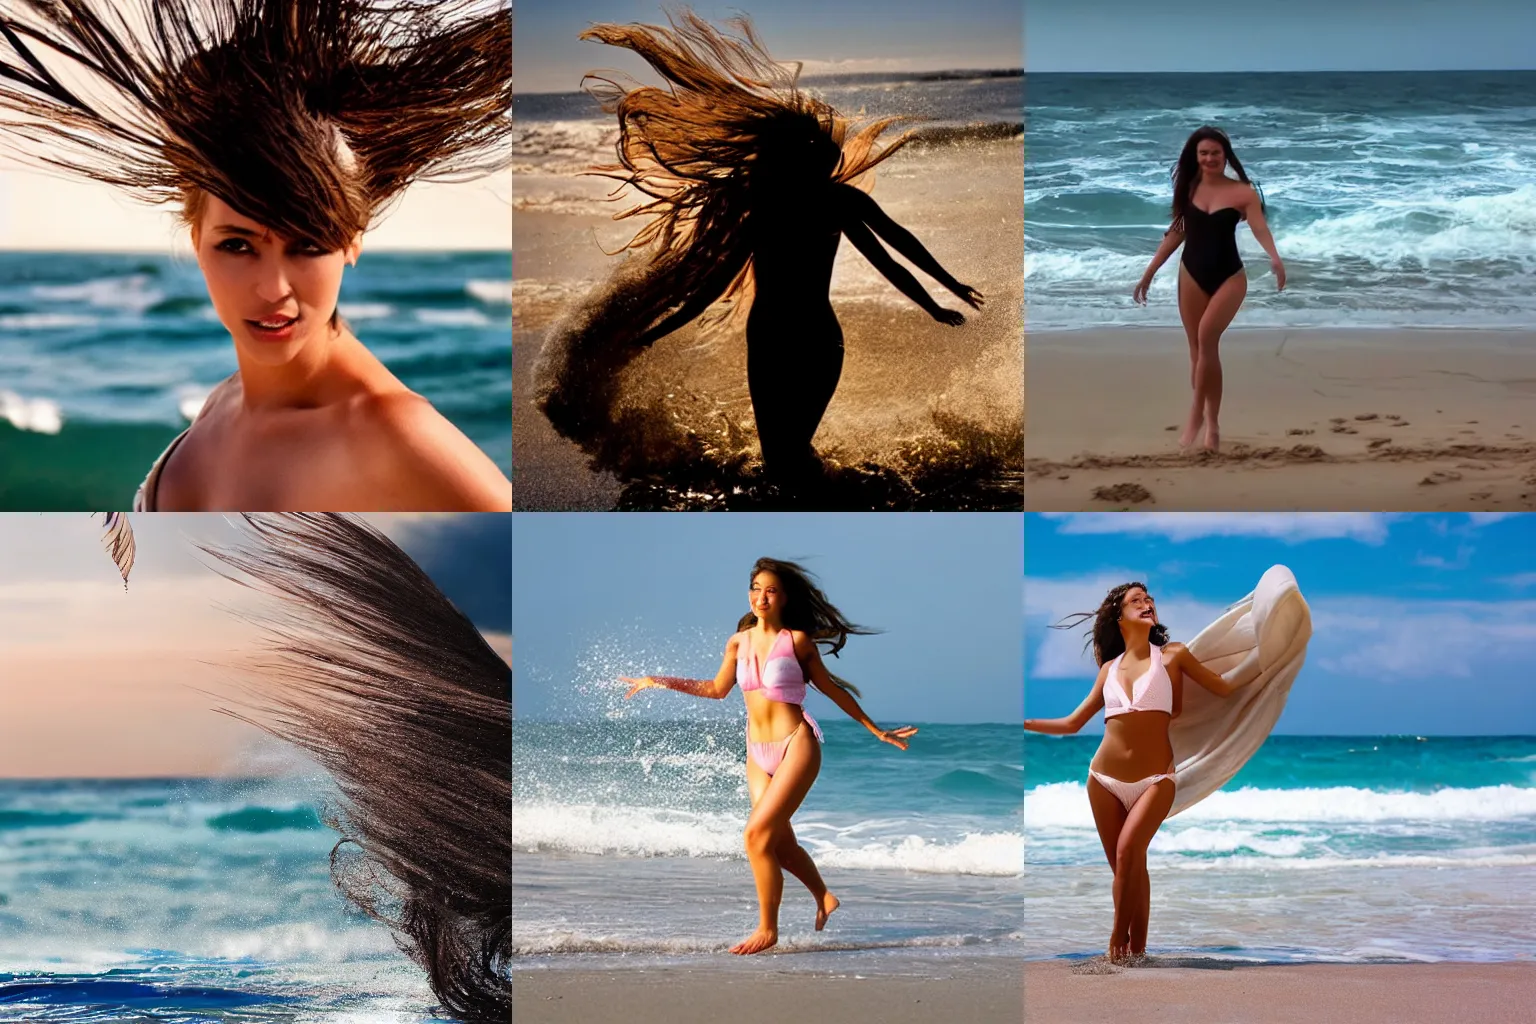 Prompt: beauty queen emerging from ocean, windy, sand waving, wide-shot